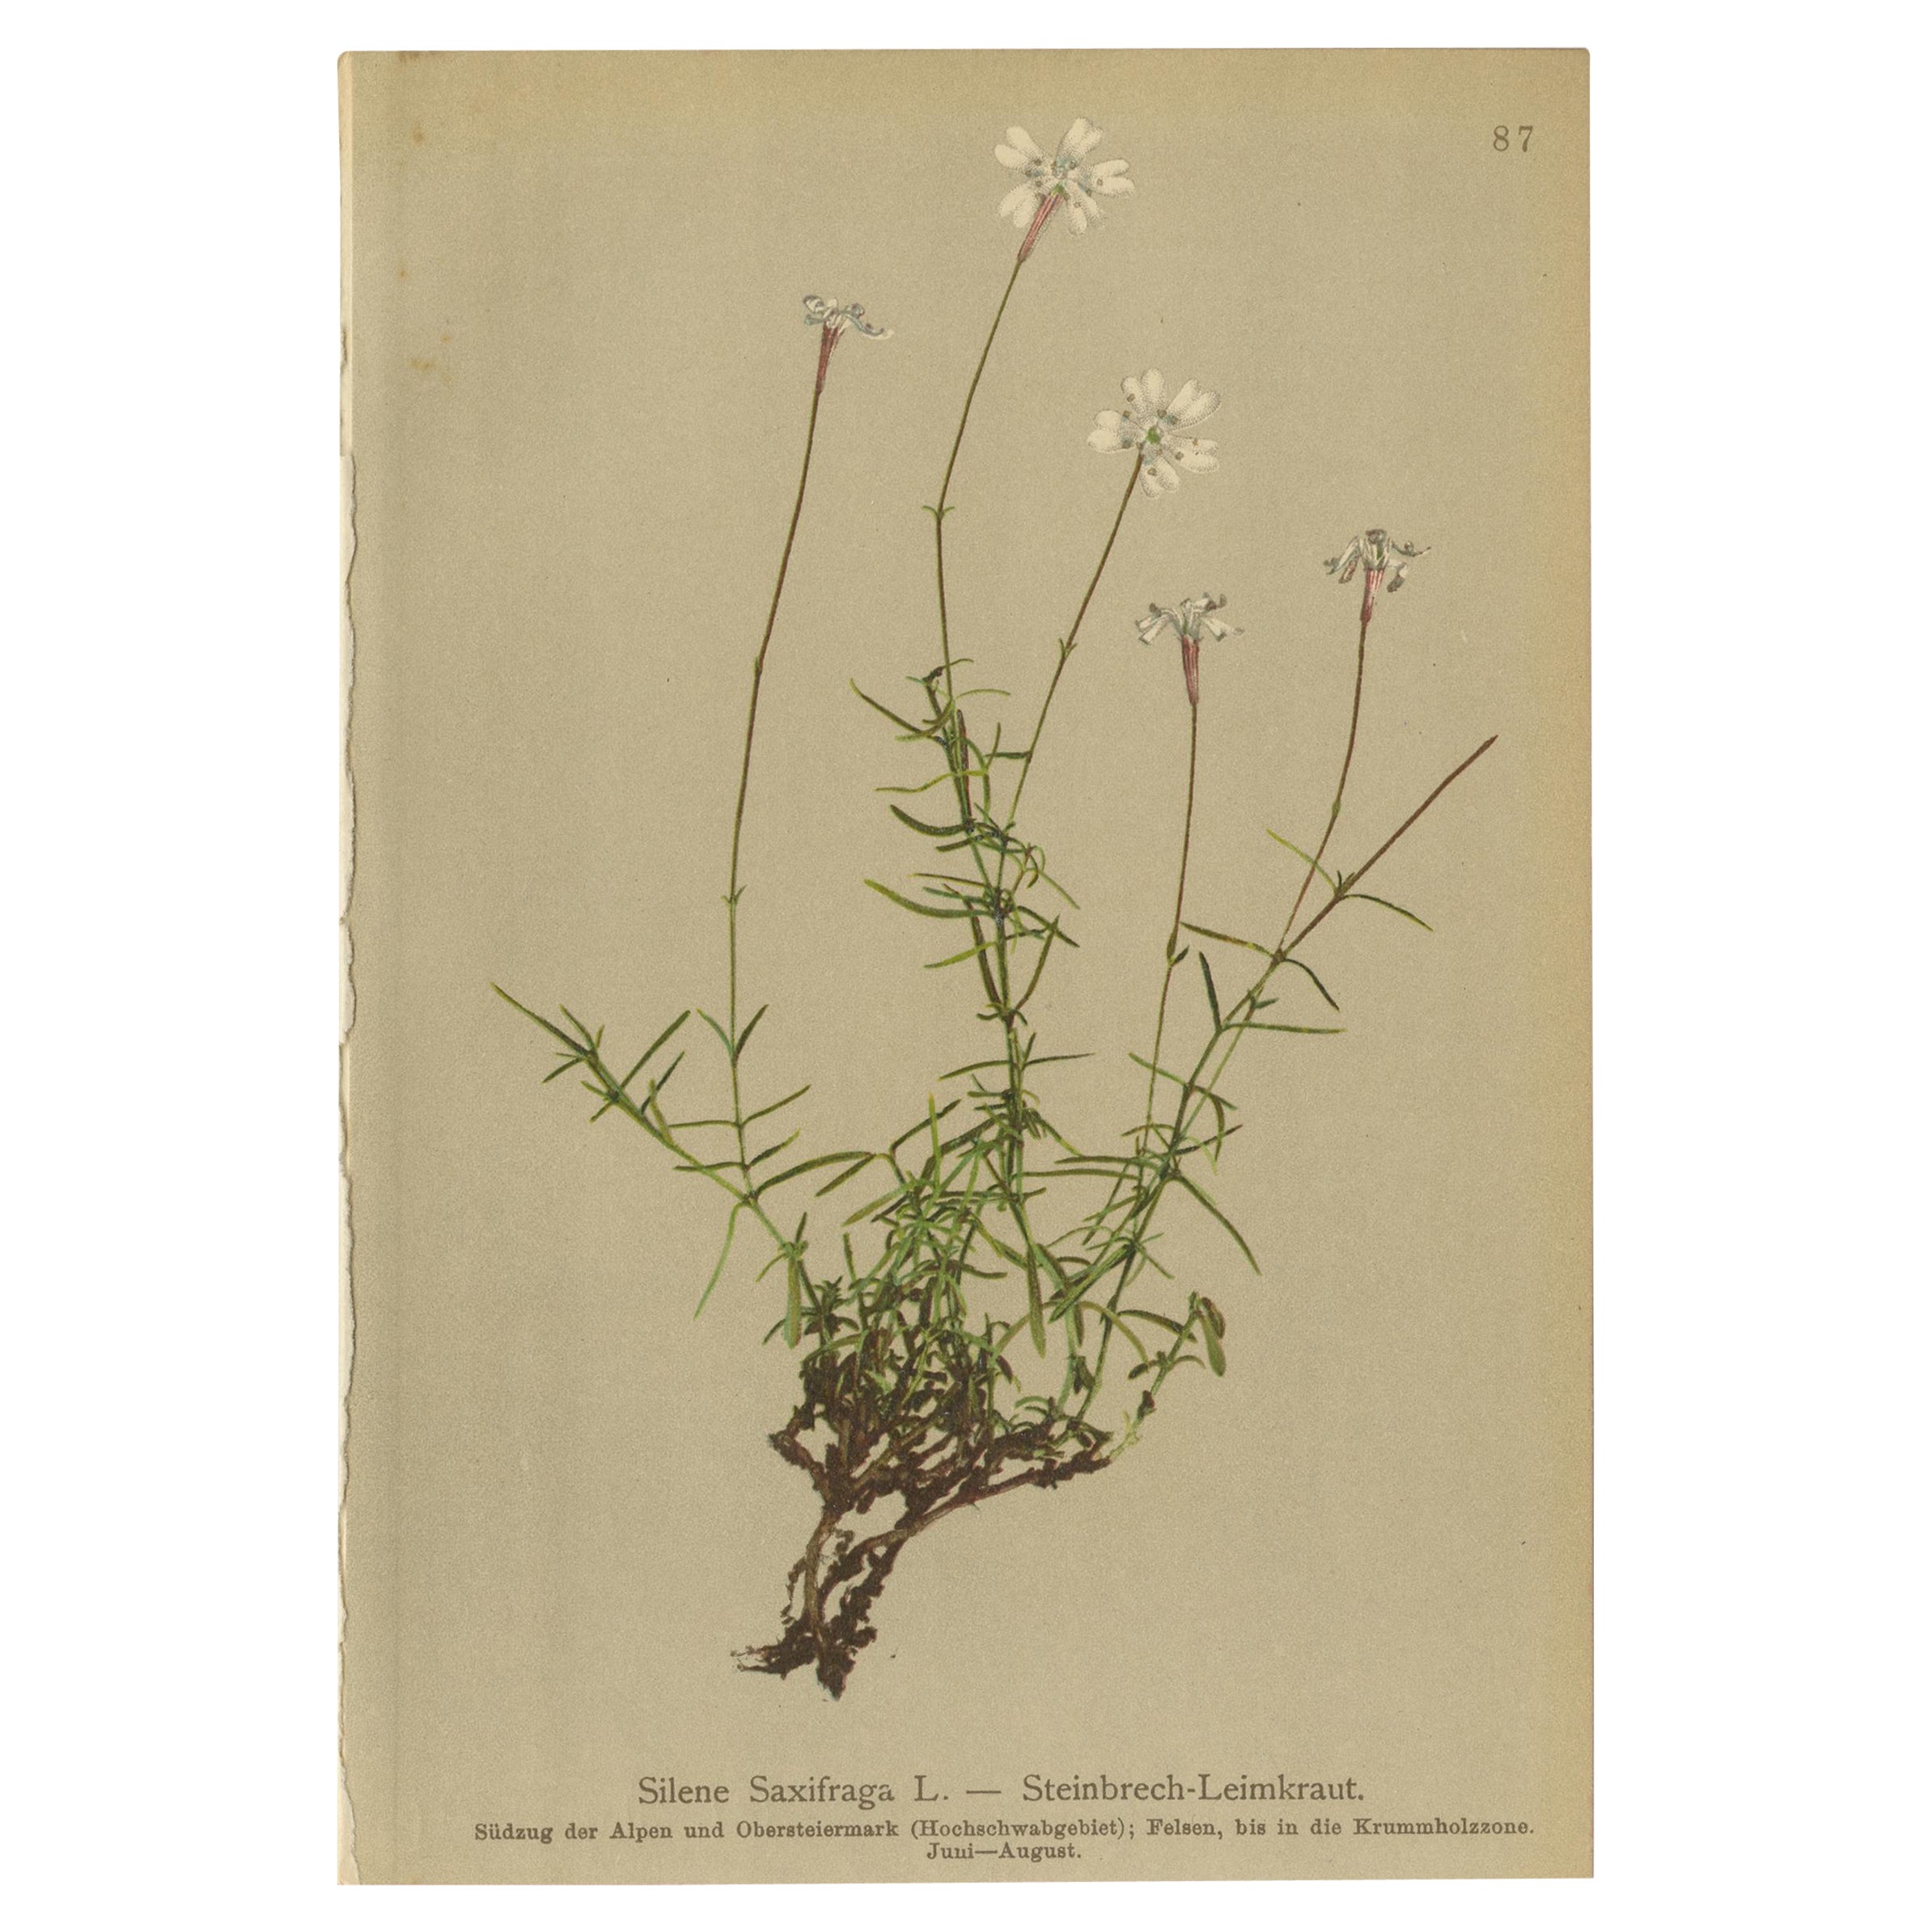 Antique Botany Print of the Silene Saxifraga or Saxifrage Catchfly, c.1897